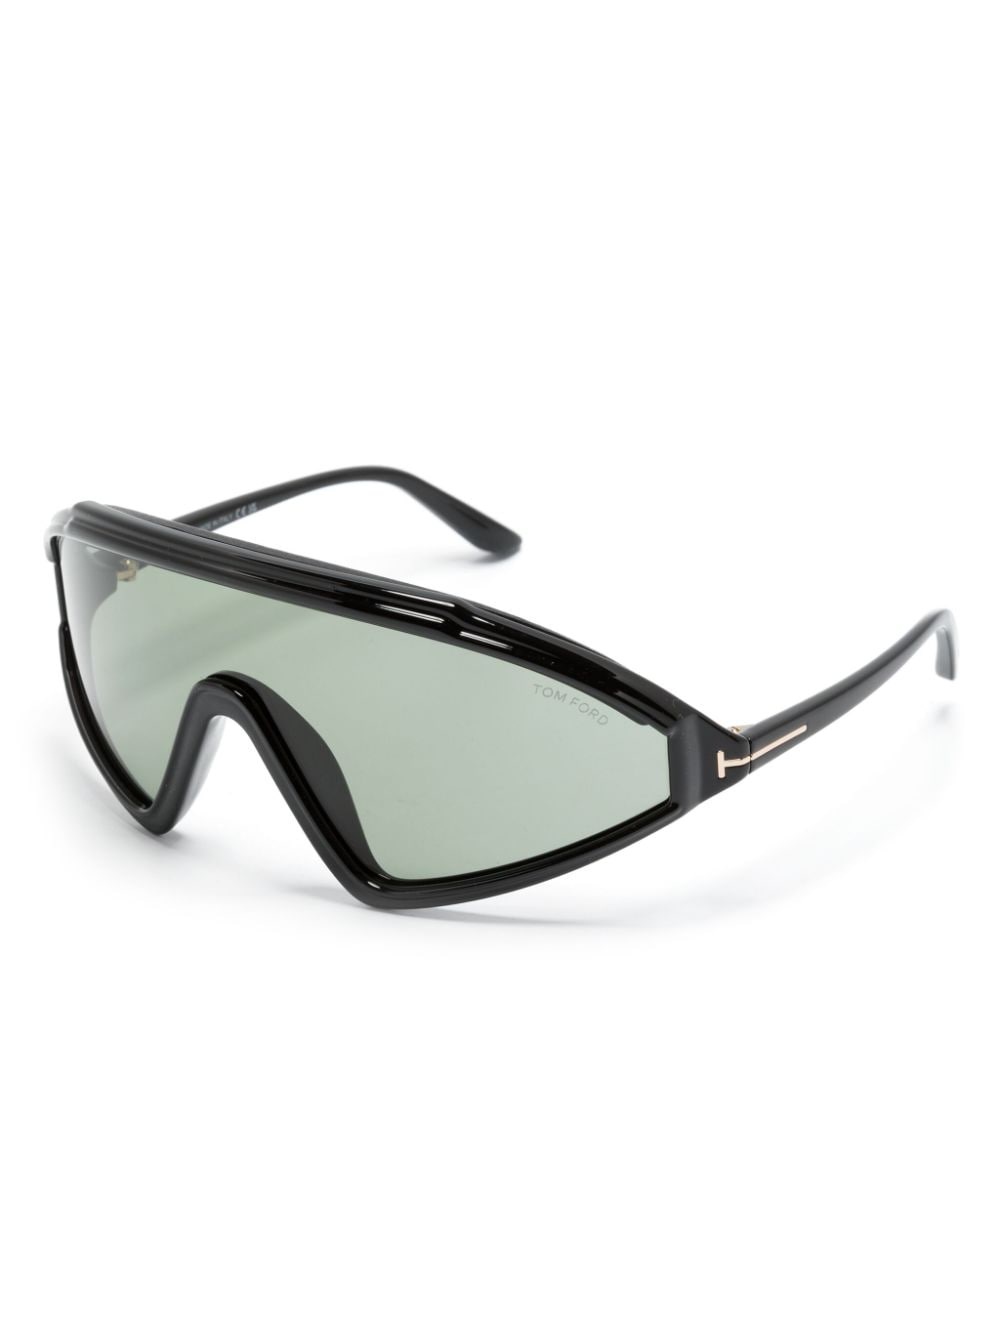 Lorna shield-frame sunglasses - 2